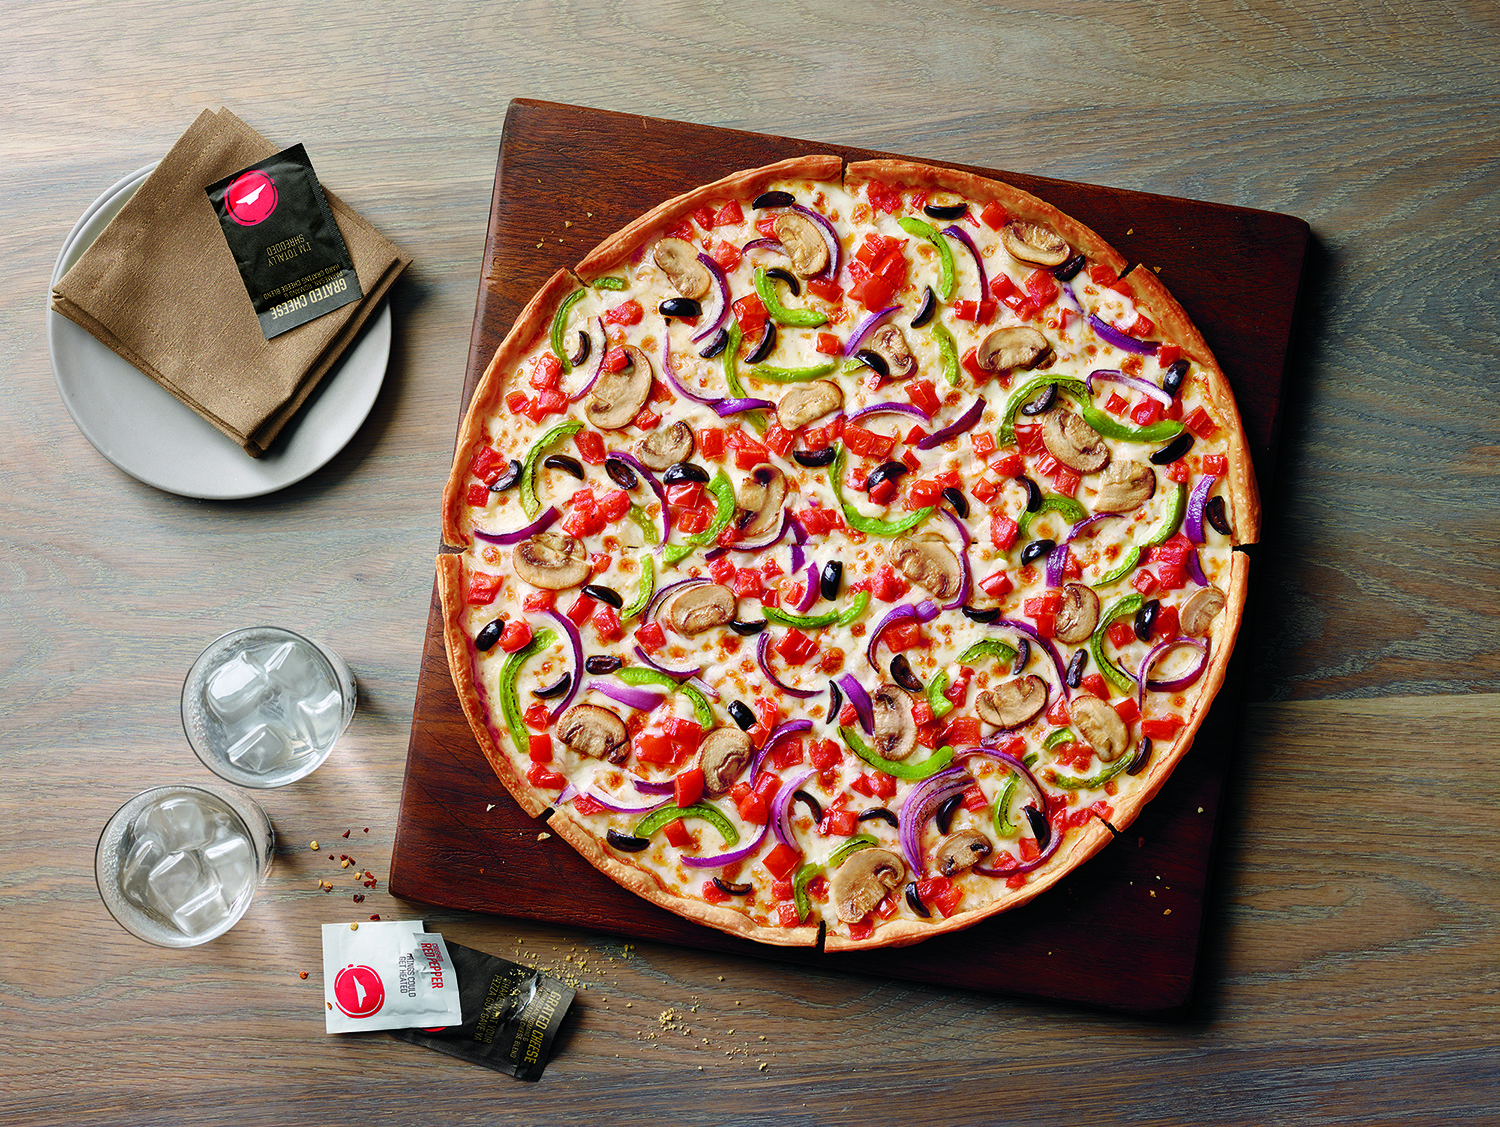 Pizza Hut Vegan: Savoring Flavor Without Compromise